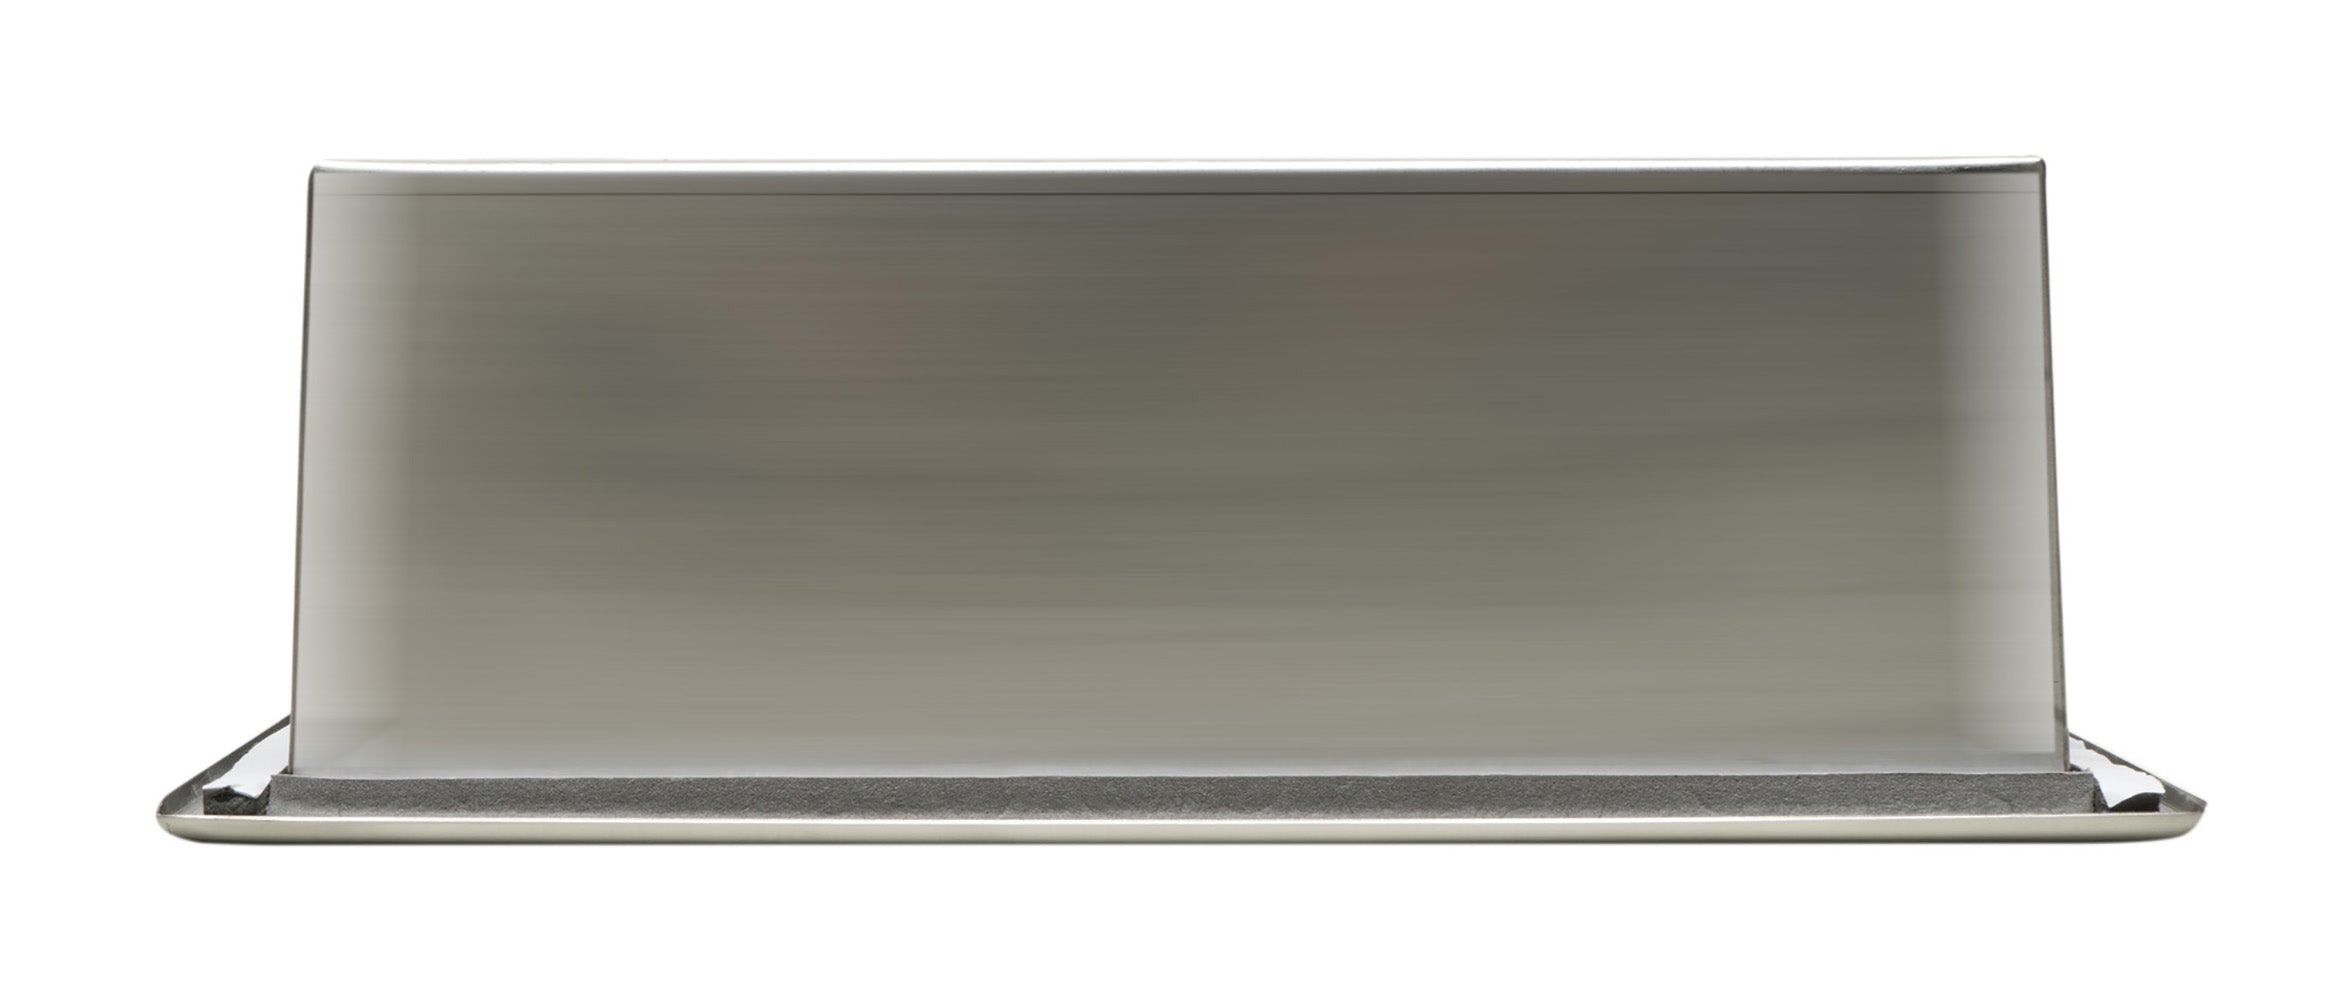 ALFI Brand - 12 x 24 Brushed Stainless Steel Vertical Double Shelf Bath Shower Niche | ABN1224-BSS